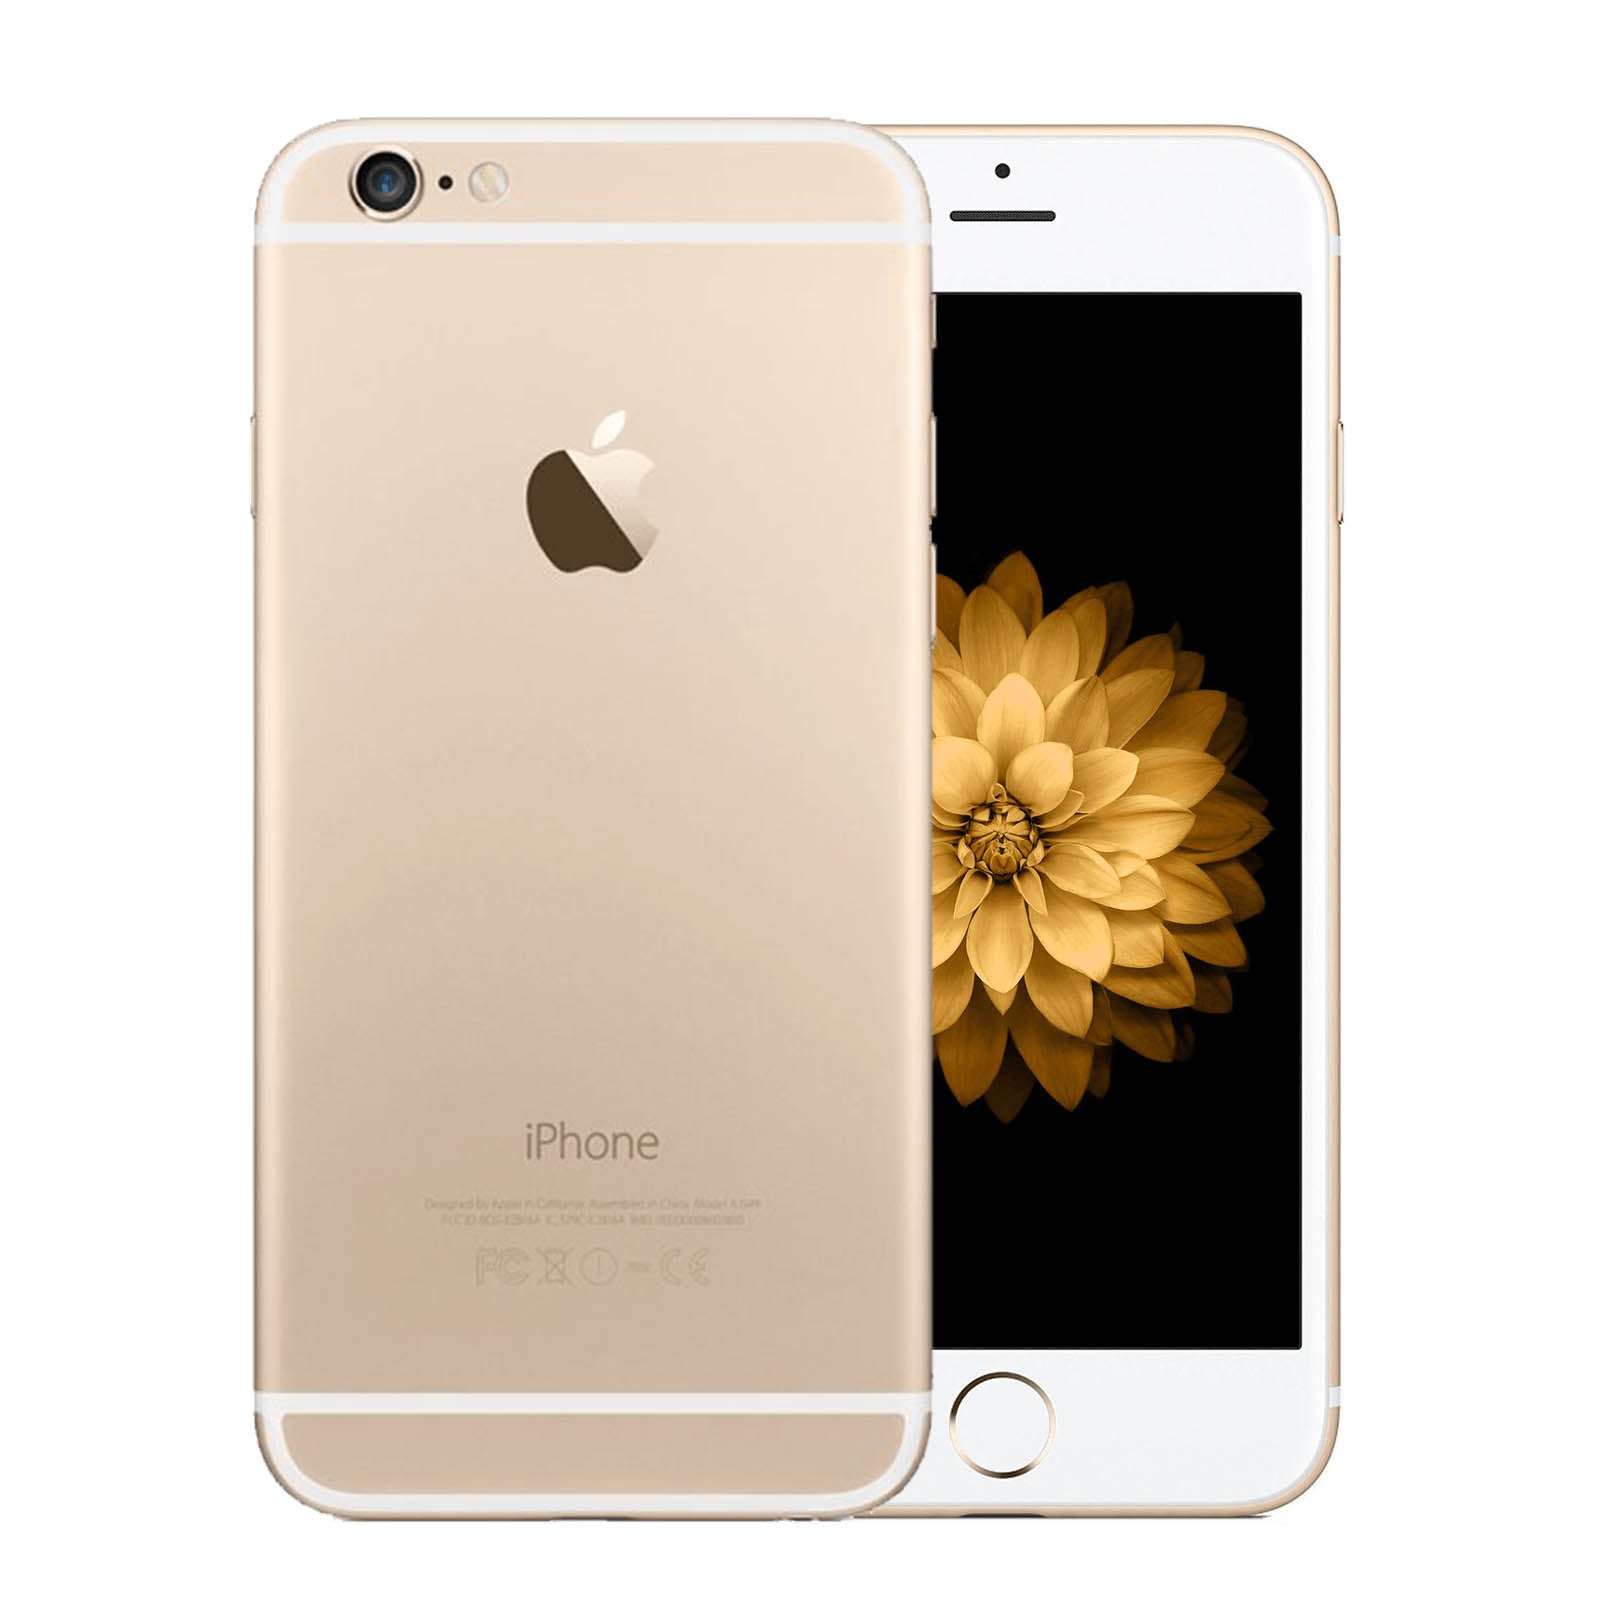 Apple iPhone 6 128GB Gold Fair - Unlocked